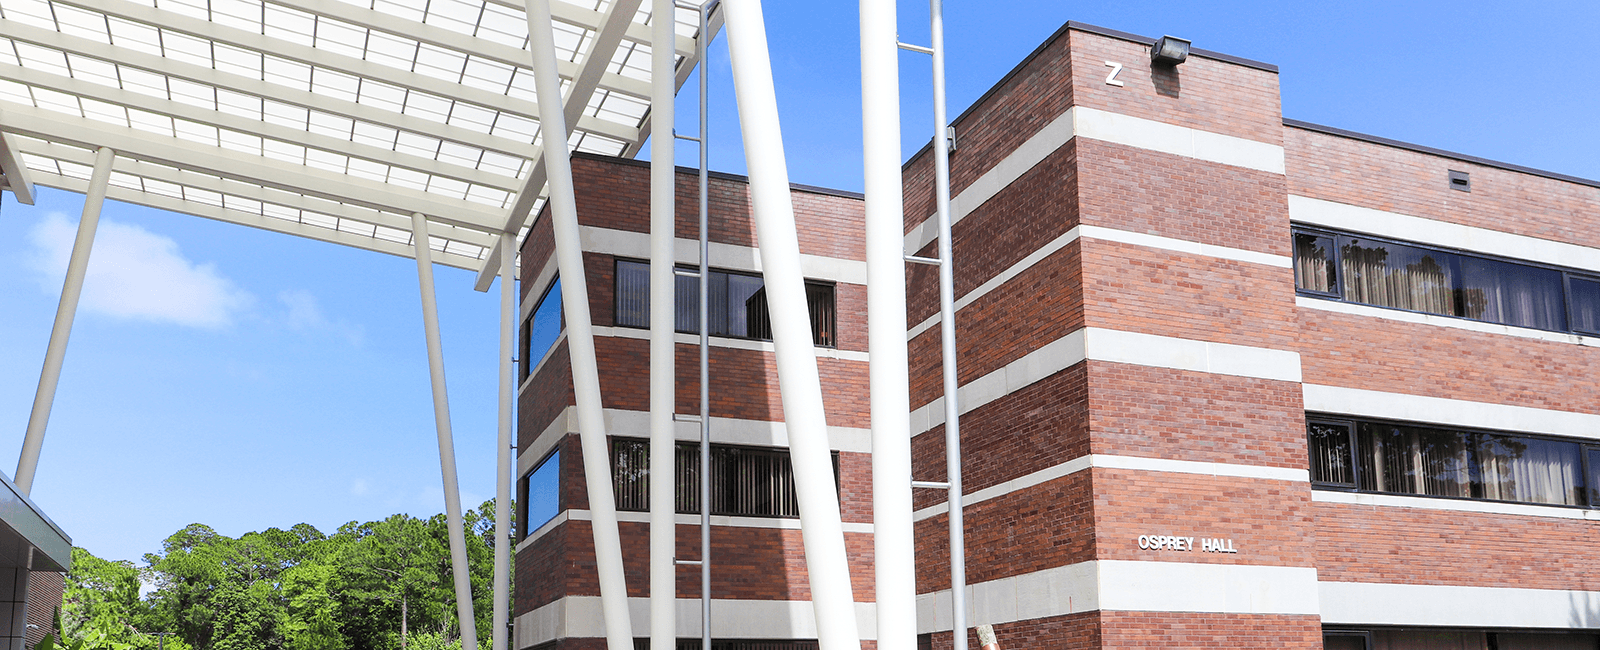 osprey hall exterior